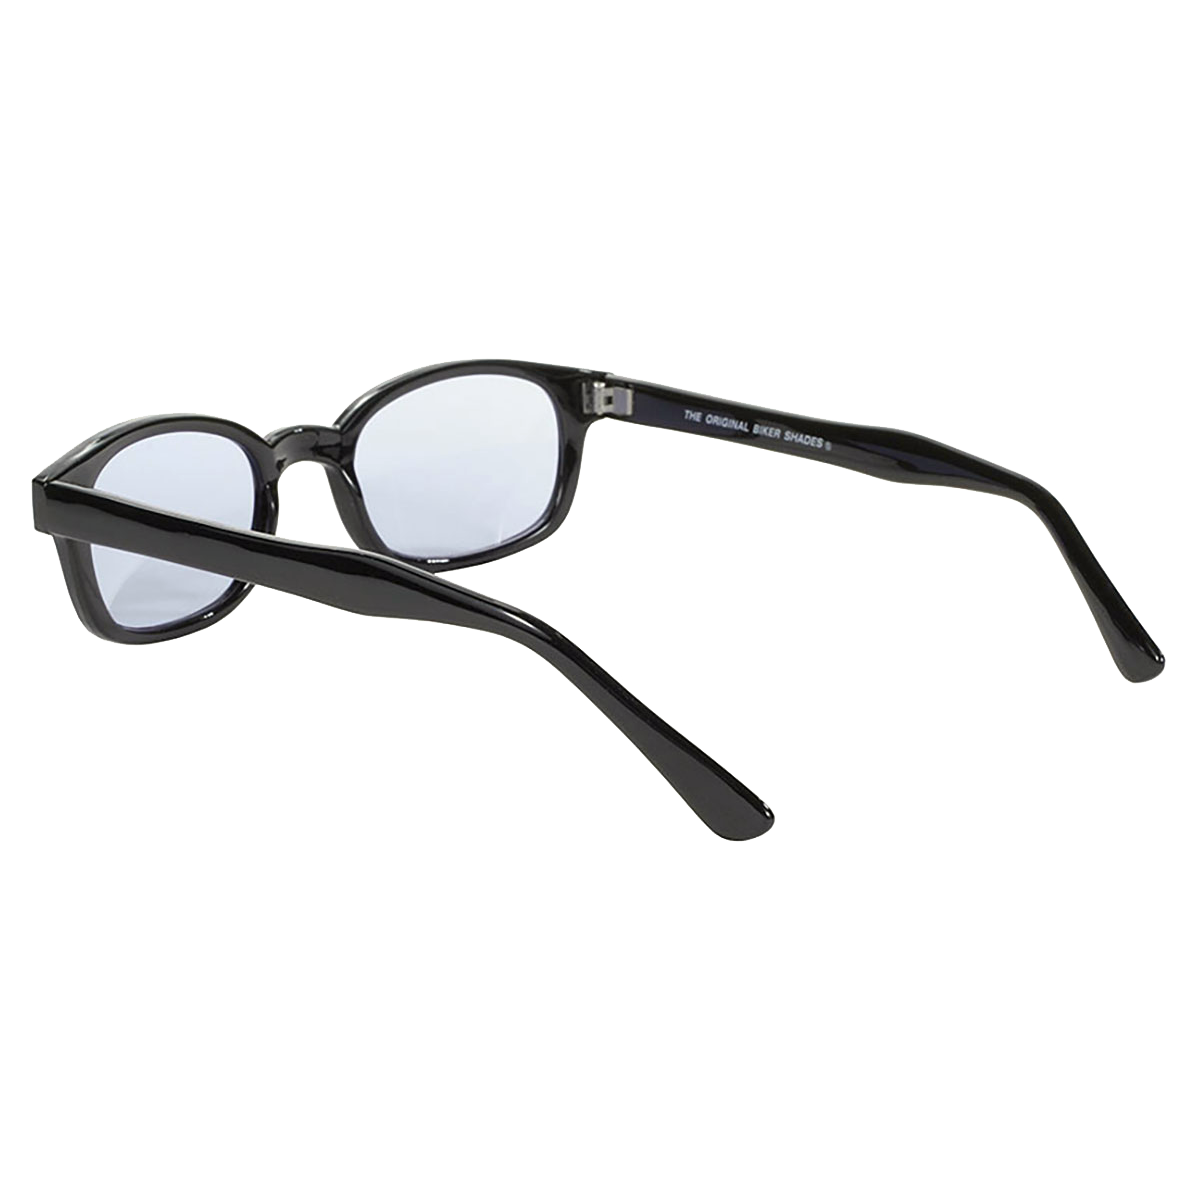 Sunglasses KD's 2012 classic - blue lenses